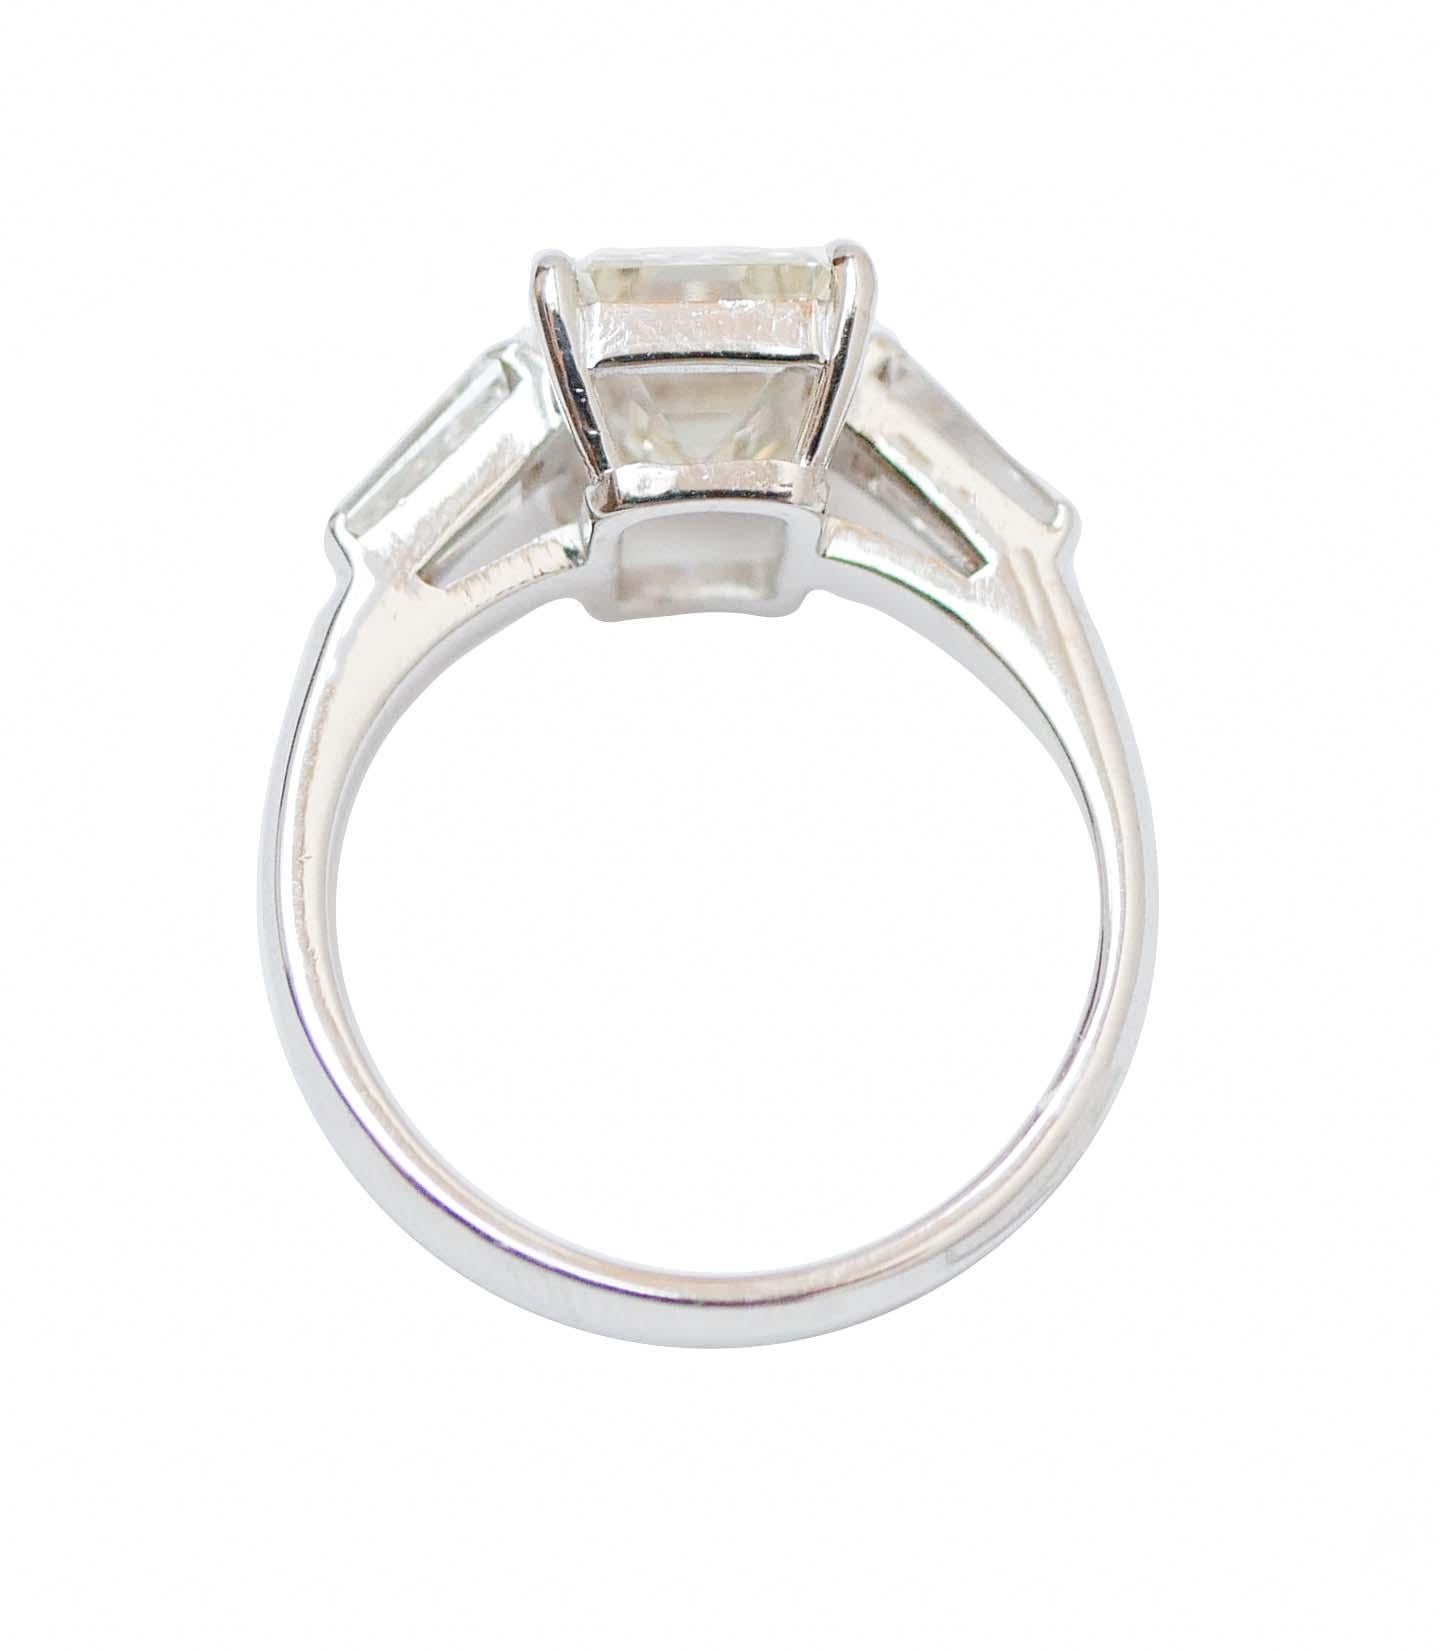 Retro 4.19 Carat Diamonds, 18 Karat White Gold Ring. For Sale